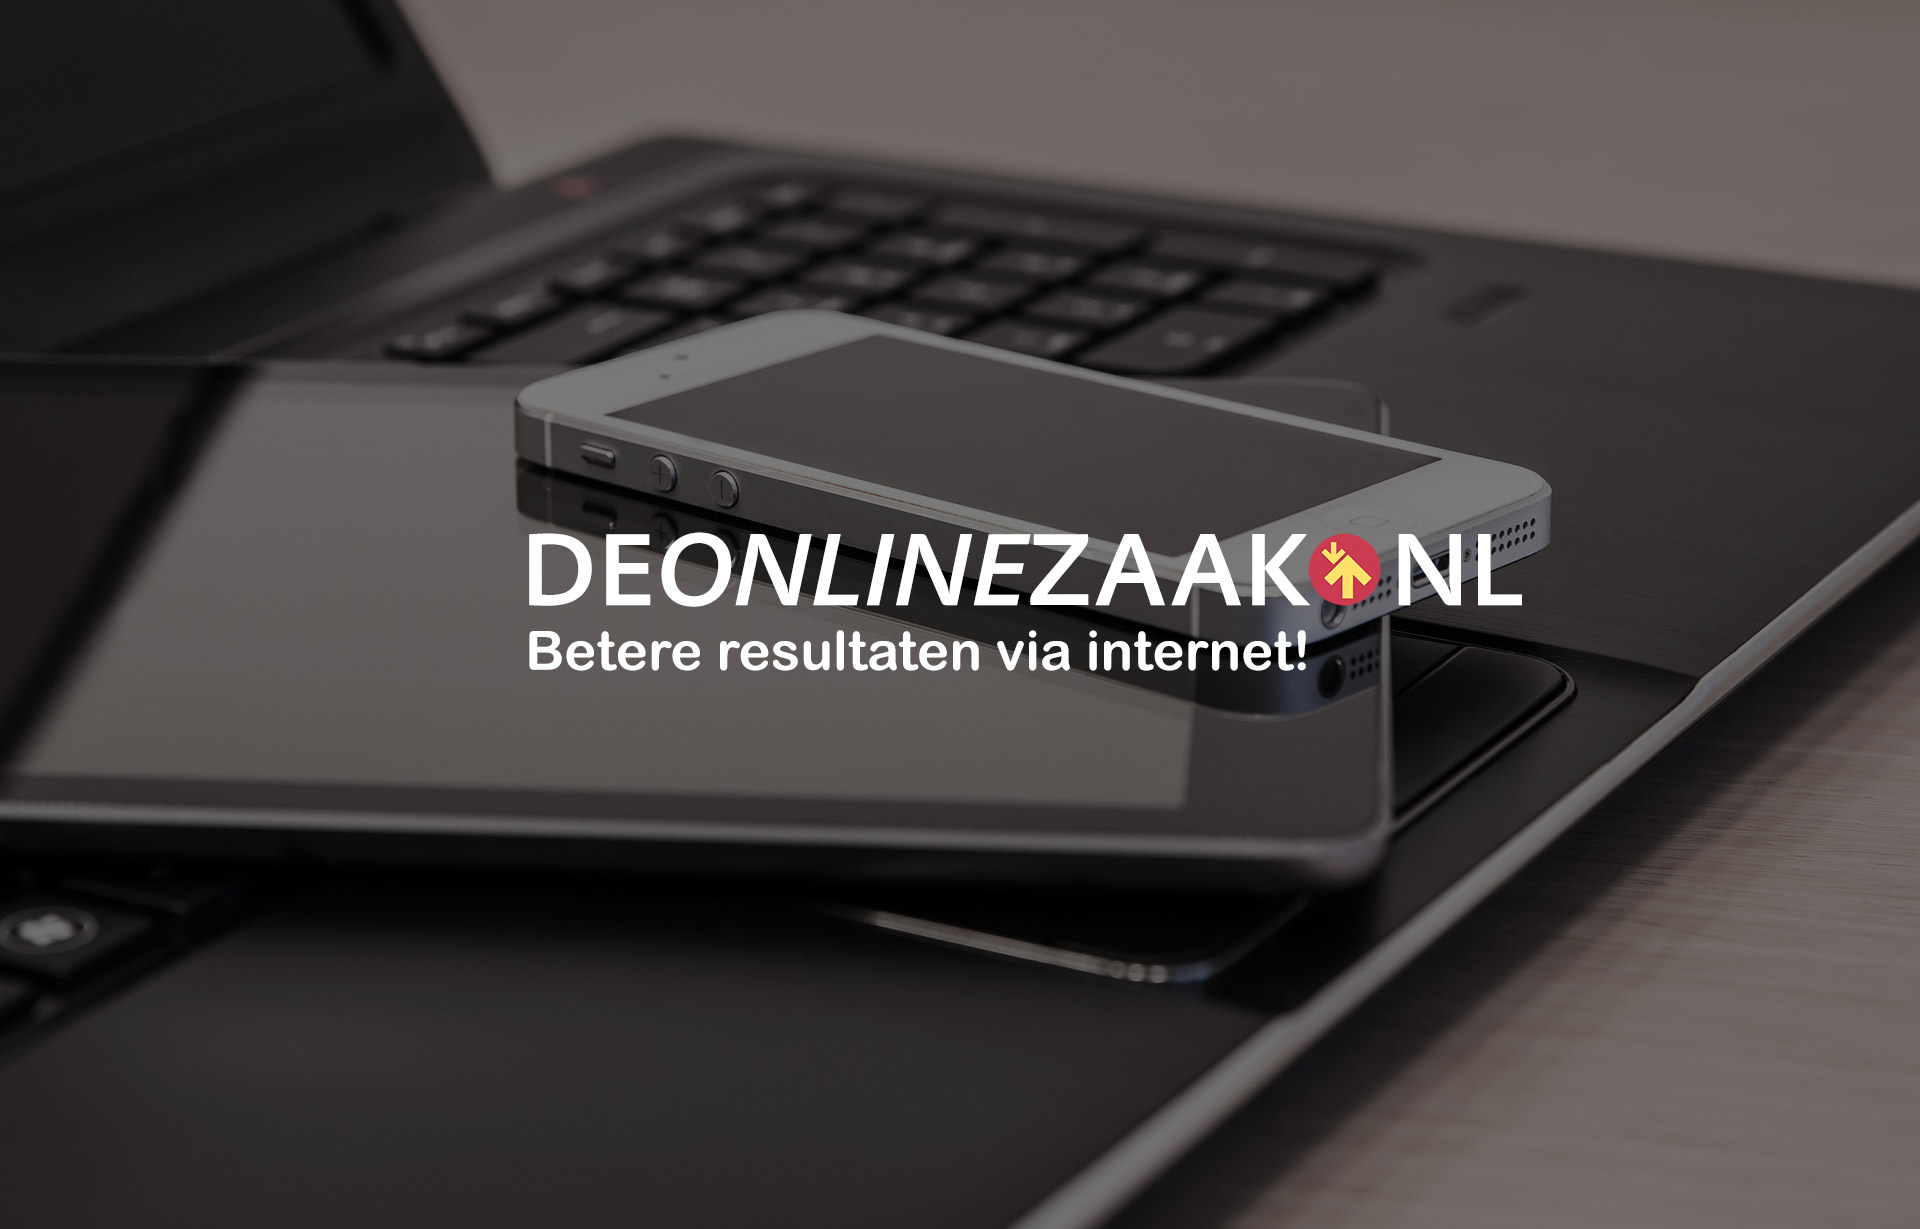 (c) Deonlinezaak.nl